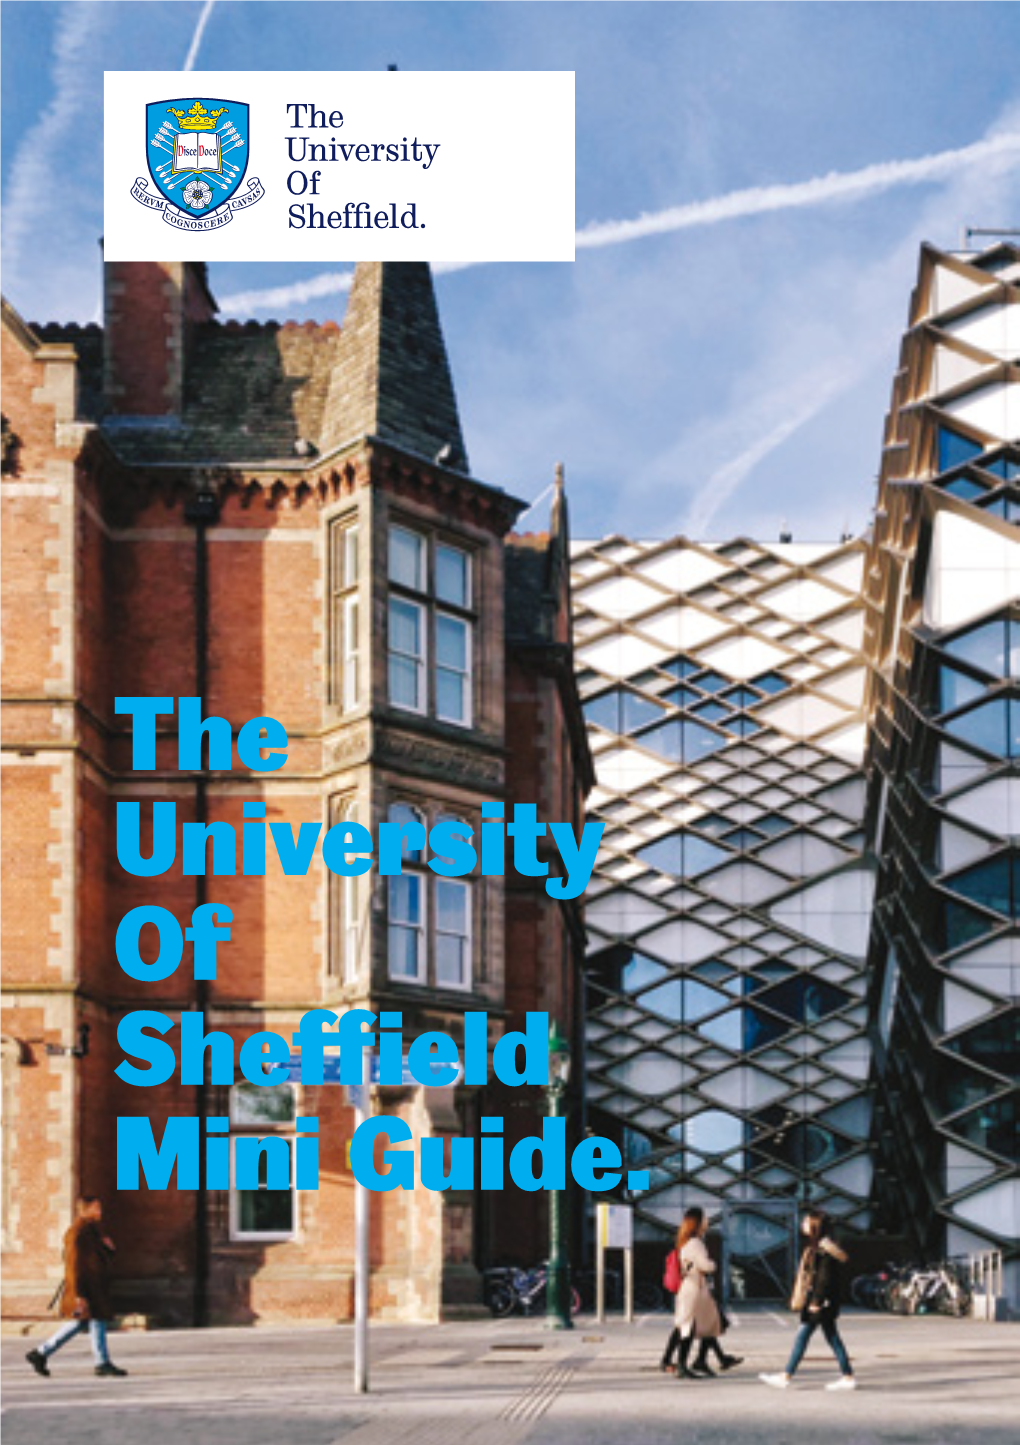 The University of Sheffield Mini Guide